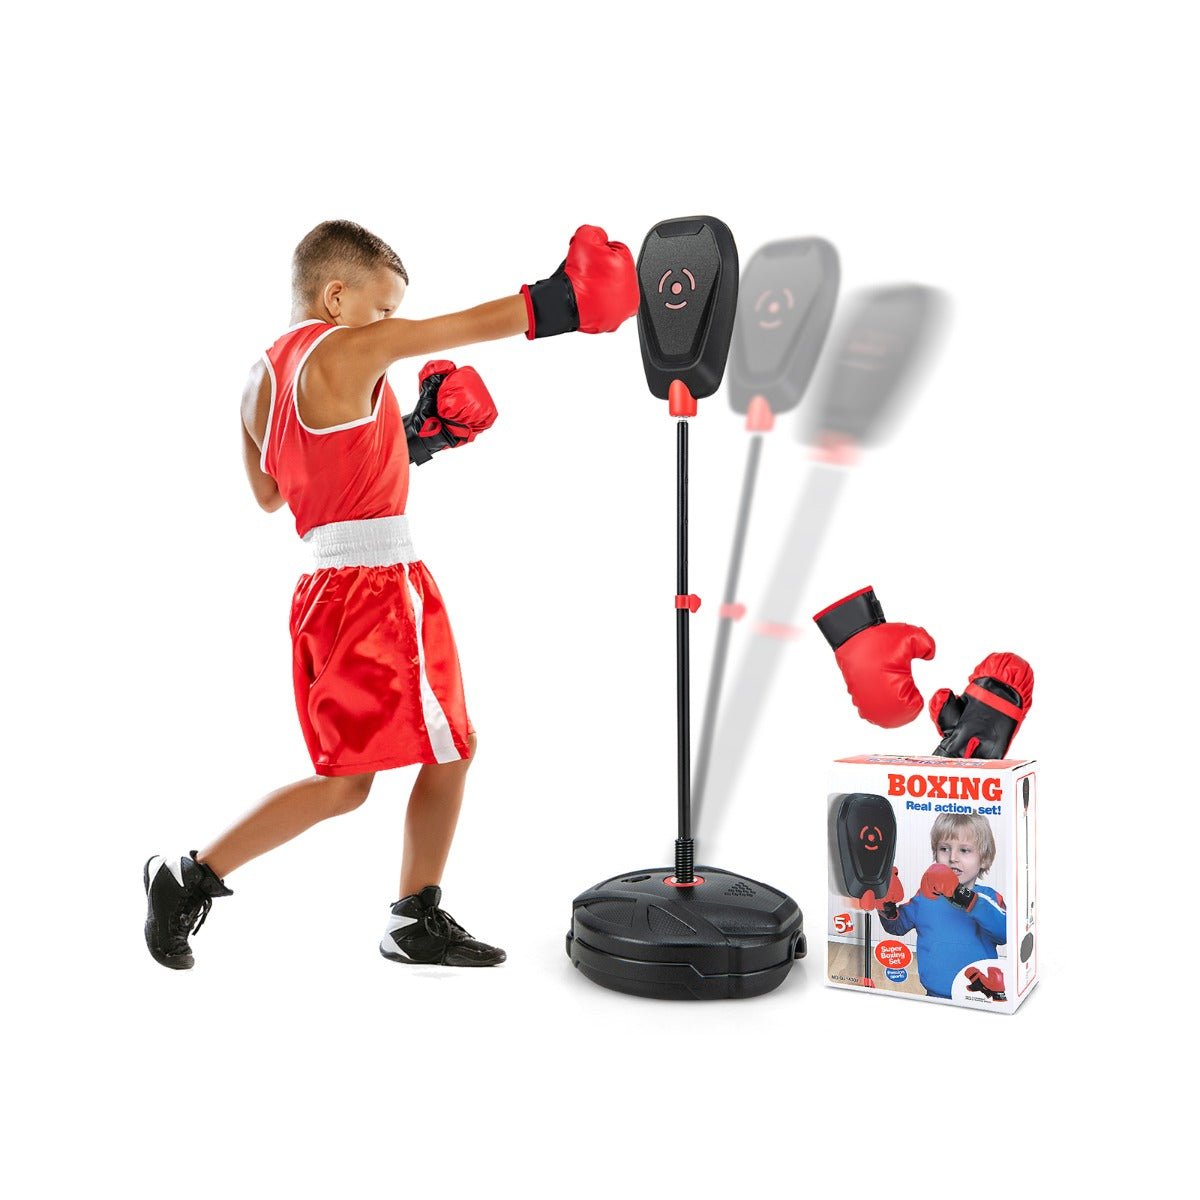 Boxed Kids Punching Bag Boxing Set with Punching Speed Ball